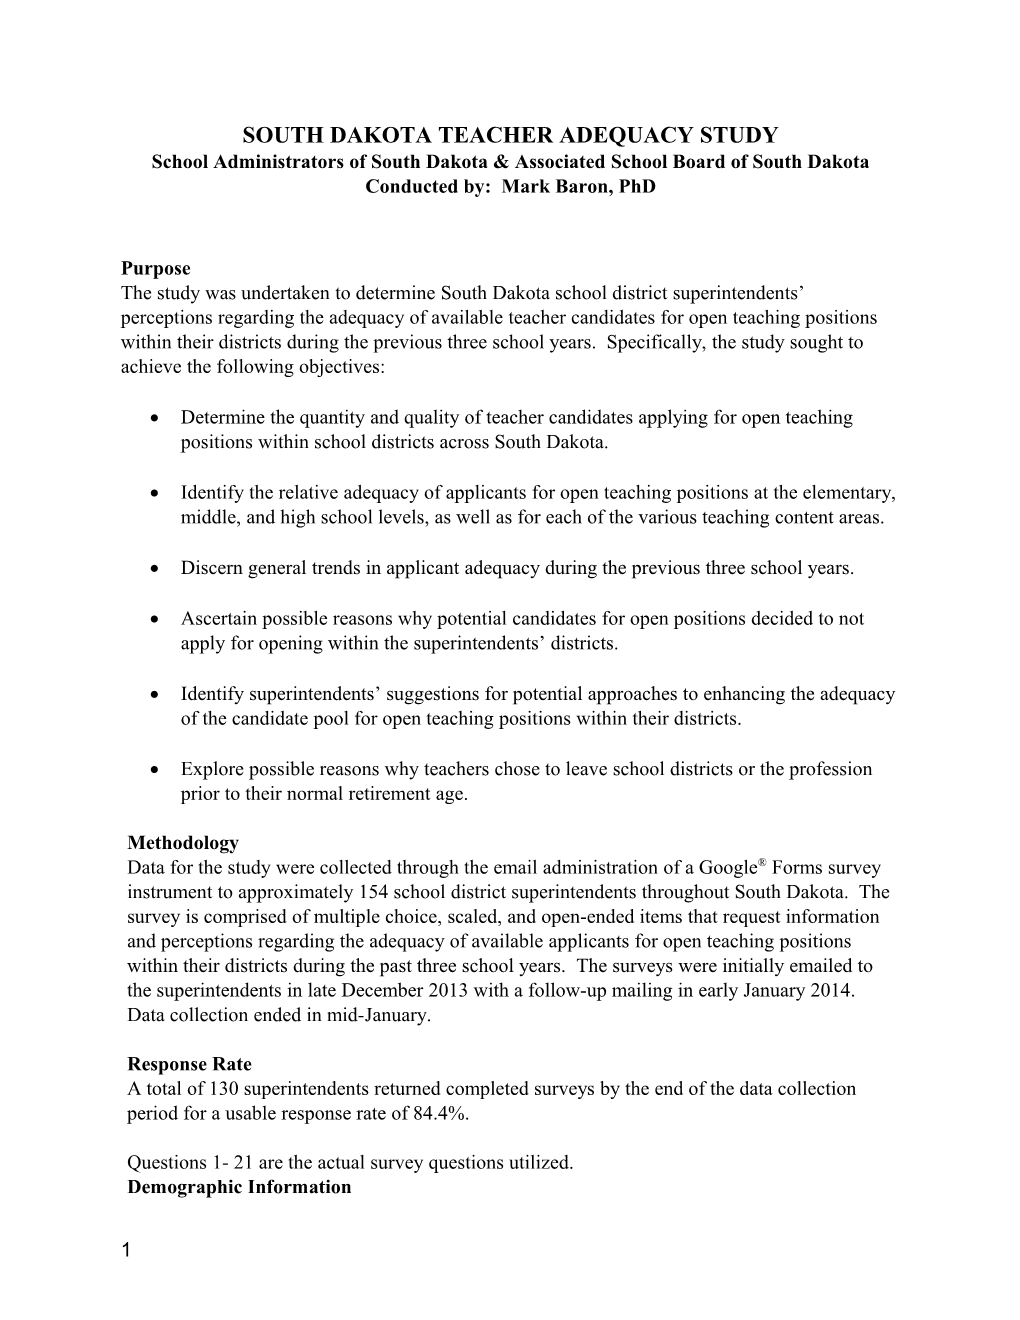 South Dakota Teacher Adequacy Study